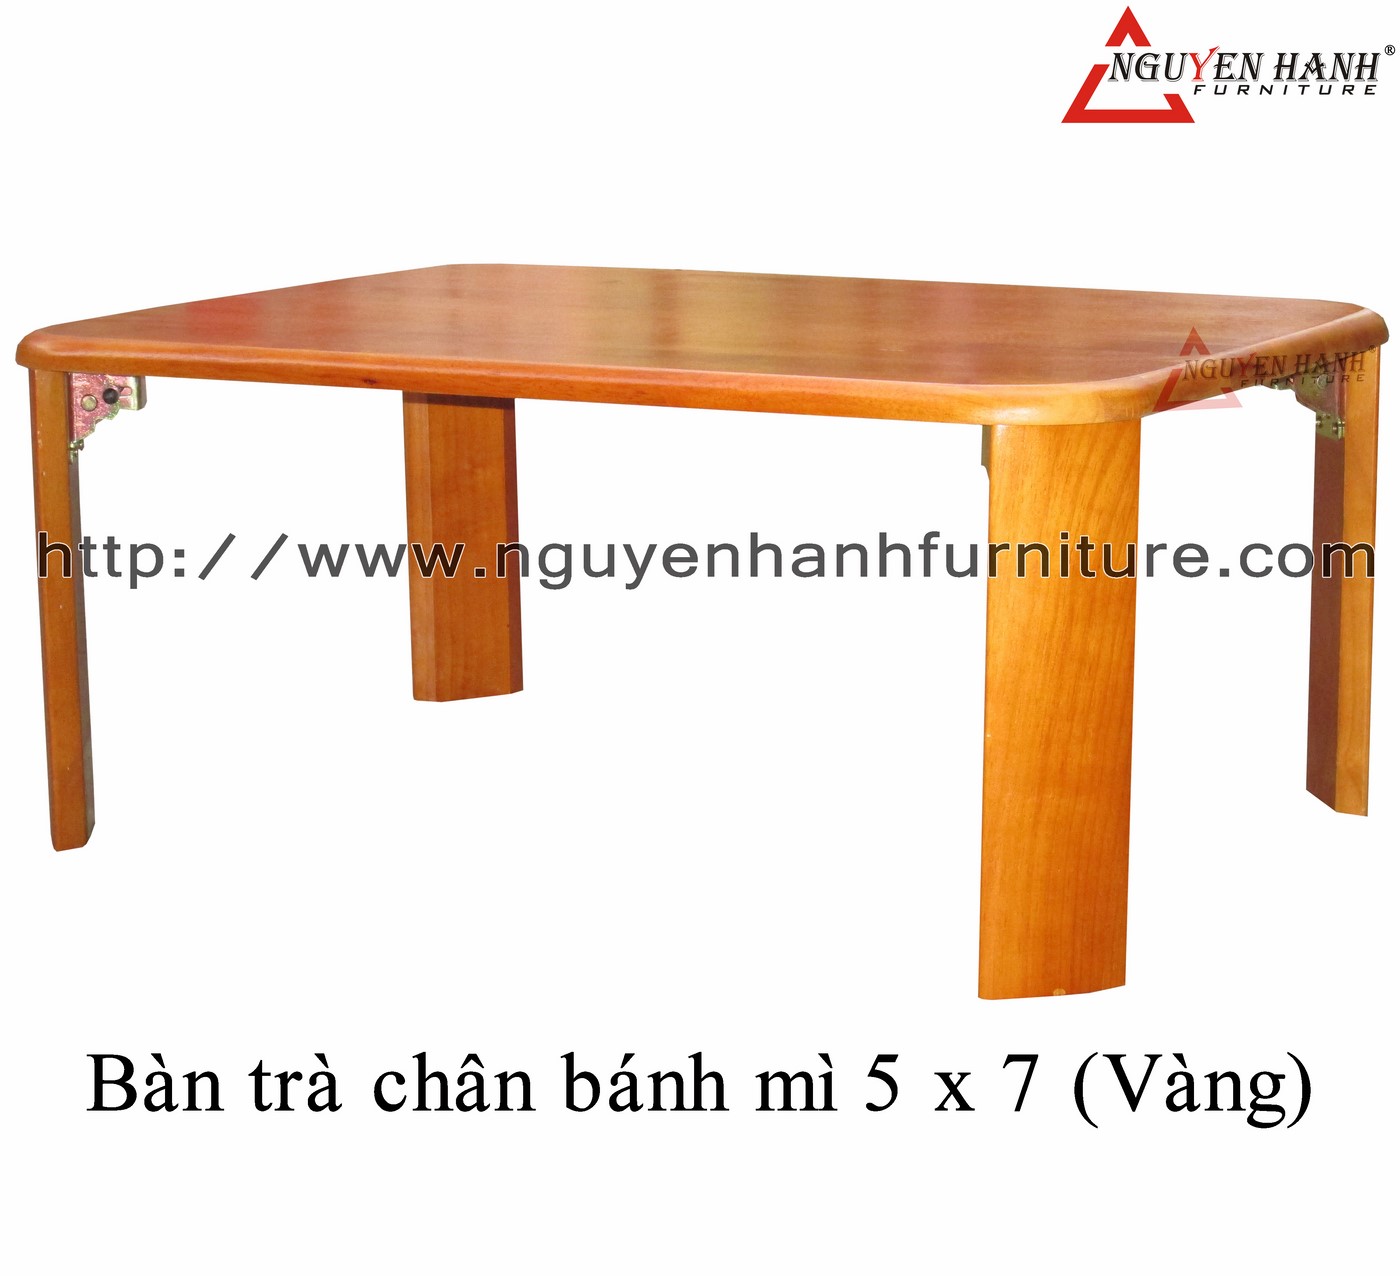 Name product: 5 x 7 Bread shape Tea table (Yellow) - Dimensions: 50 x 70 x 30 (H) - Description: Wood natural rubber